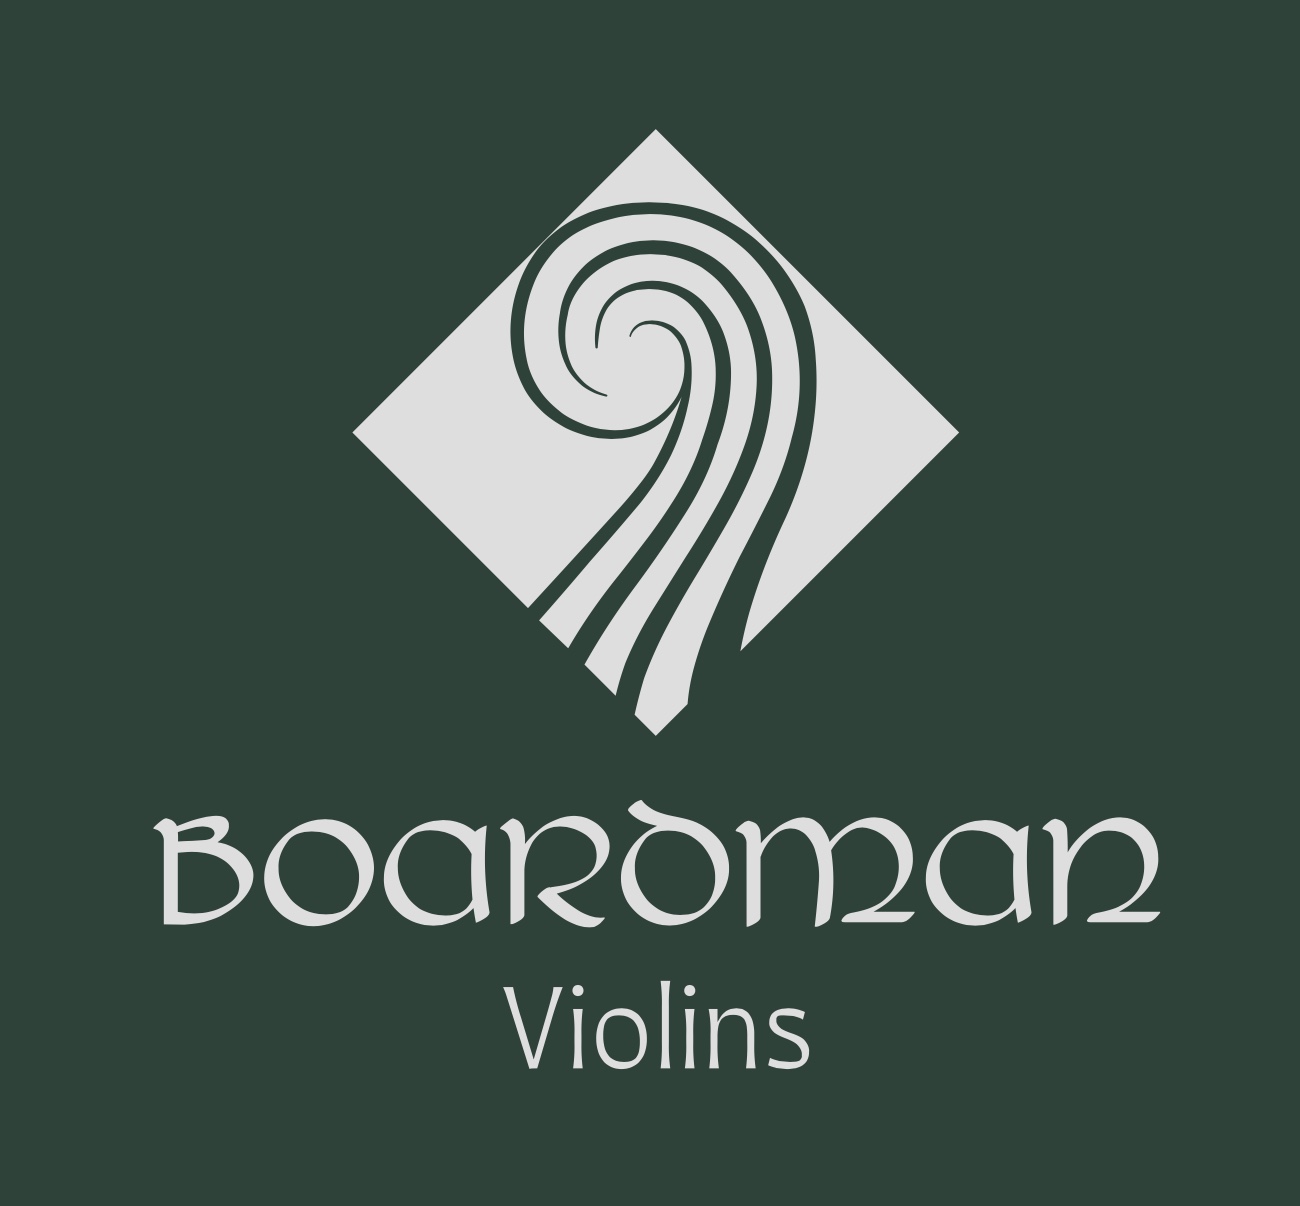 Logo showing violin